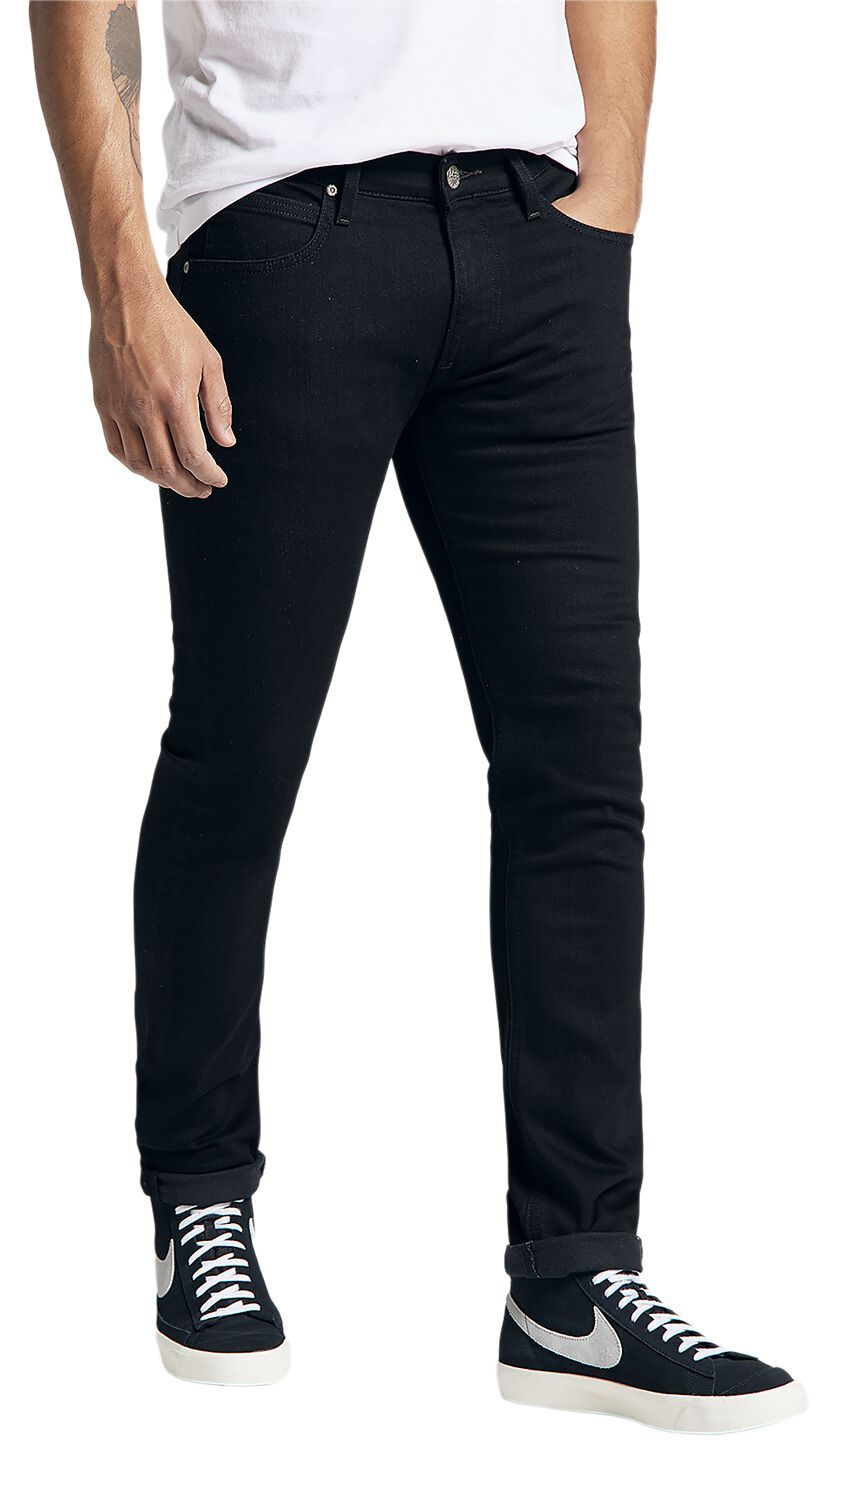 Image of Lee Jeans Luke Slim Tapered Fit Clean Black Jeans schwarz